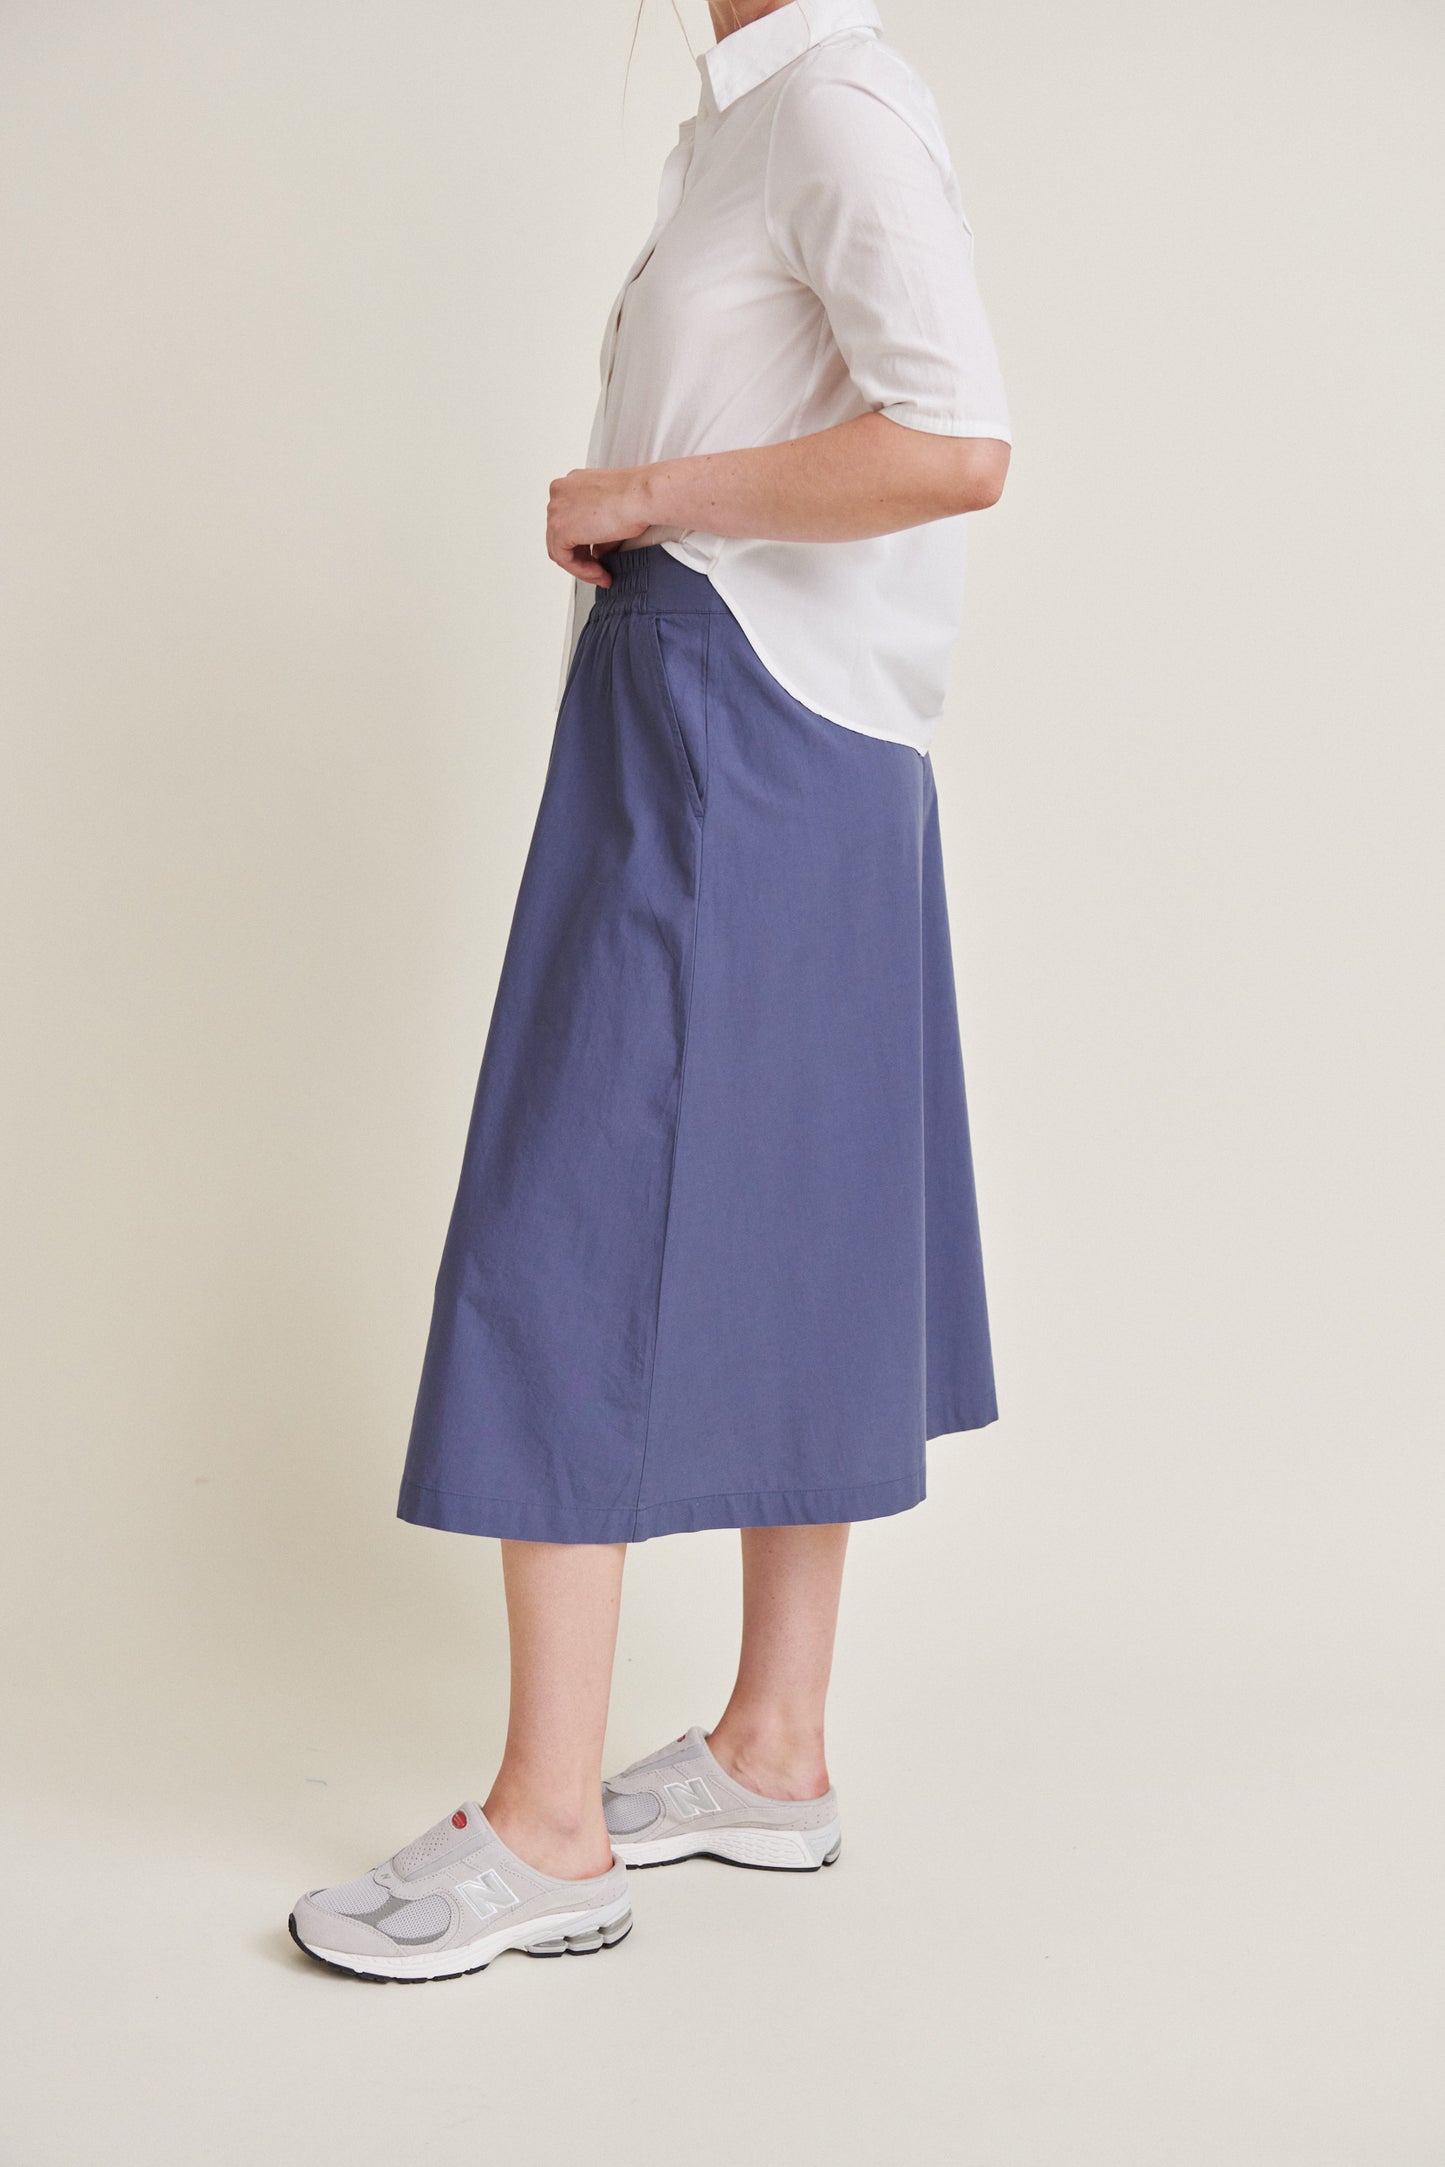 Basic Apparel - Tilde Skirt - Vintage Indigo